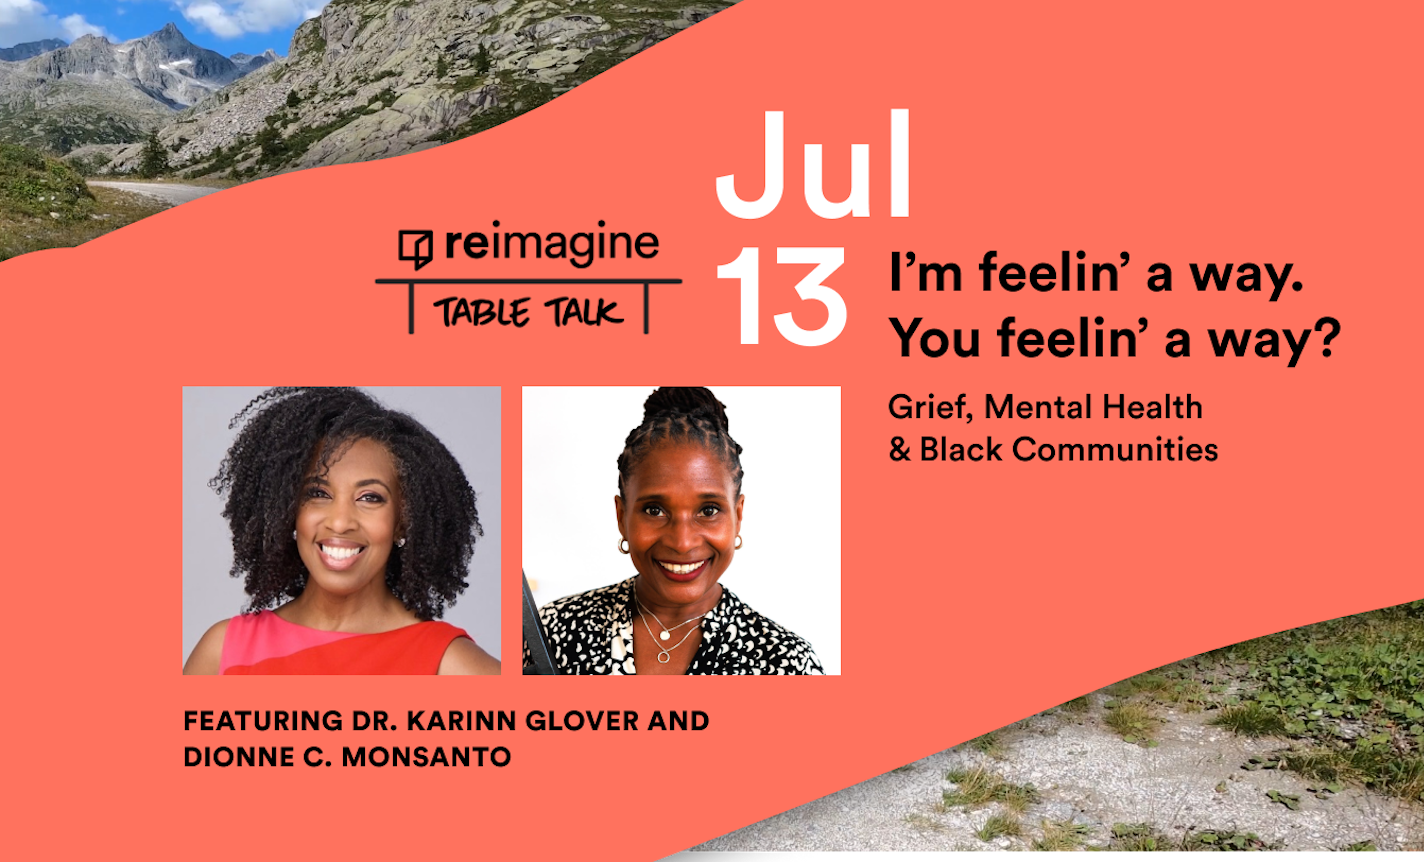 I’m feelin’ a way. You feelin’ a way? Grief, Mental Health & Black Communities